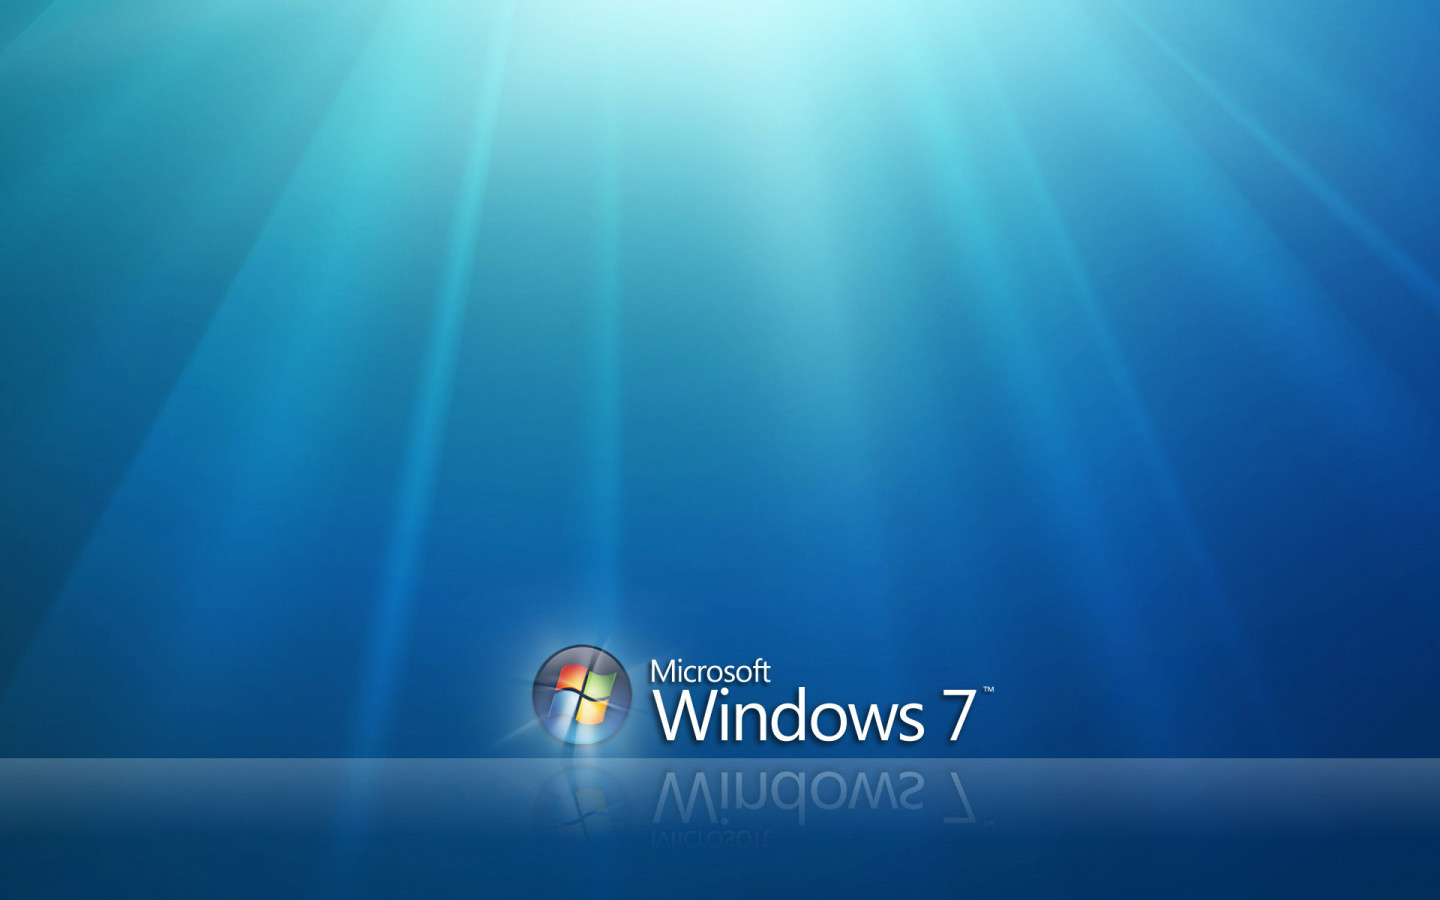 Microsoft Windows Seven 7